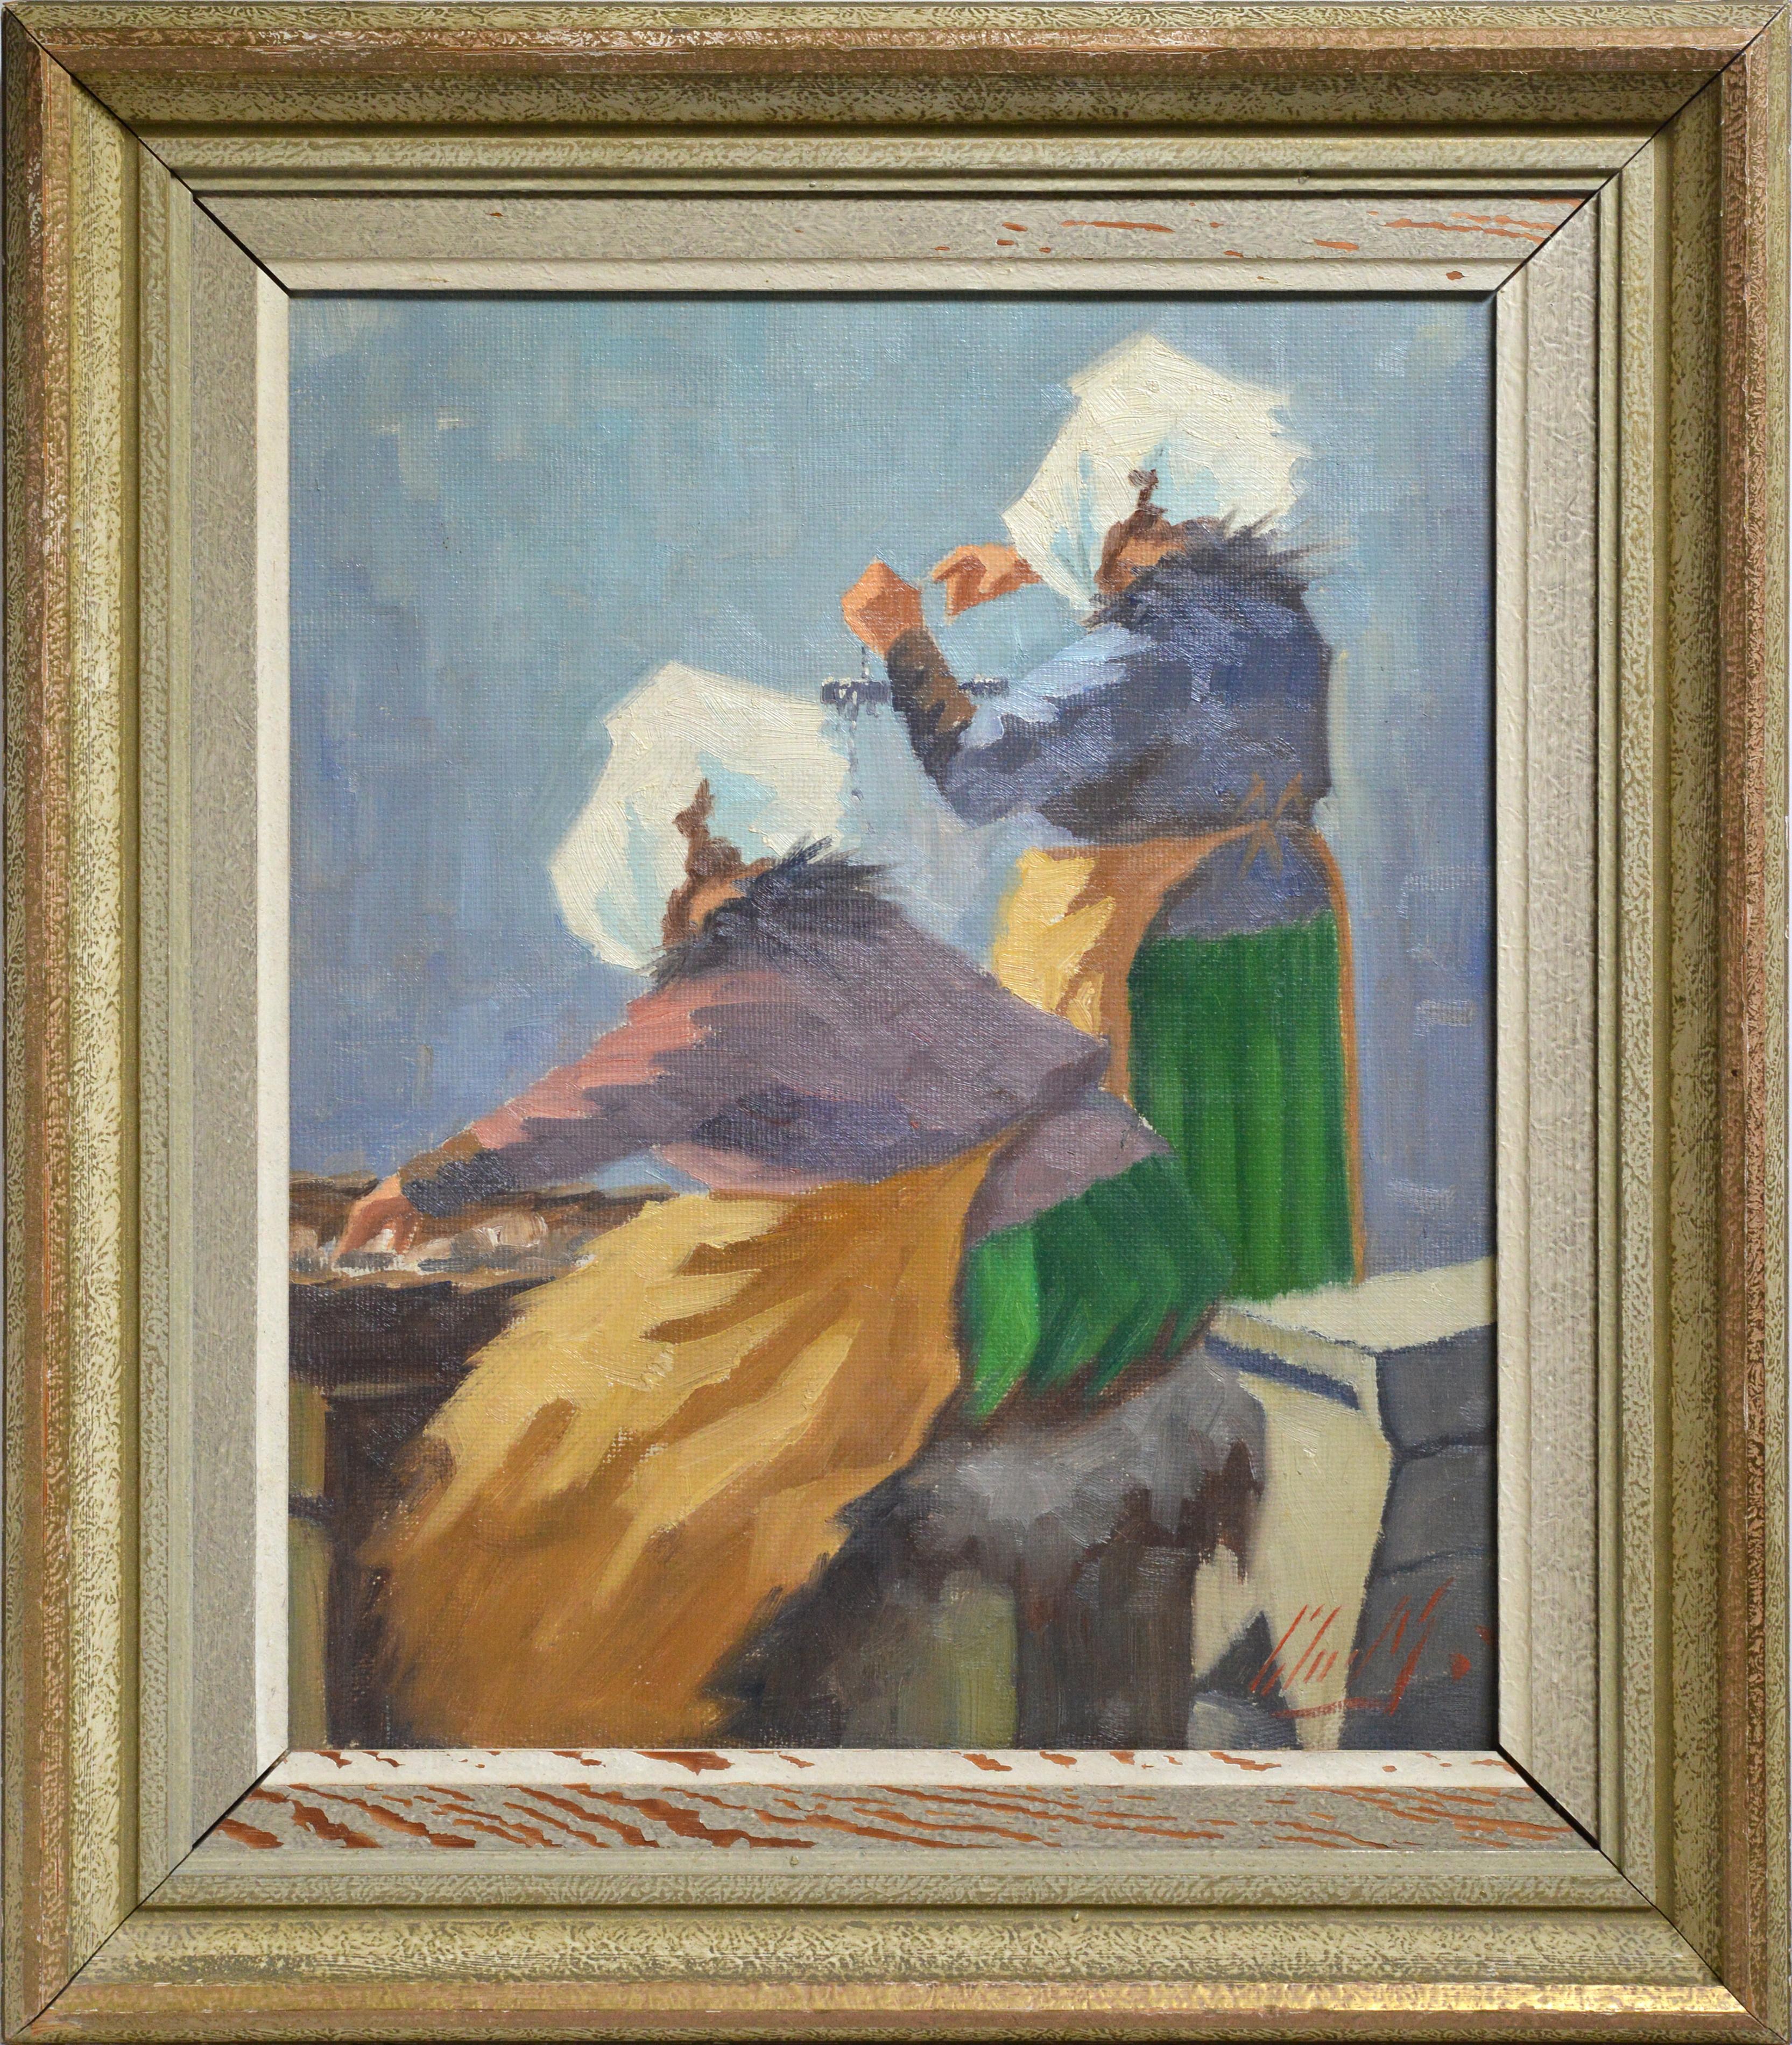 Søren Christian Bjulf Portrait Painting - Danish Fish Market Scene early 20th century Oil Painting Signed